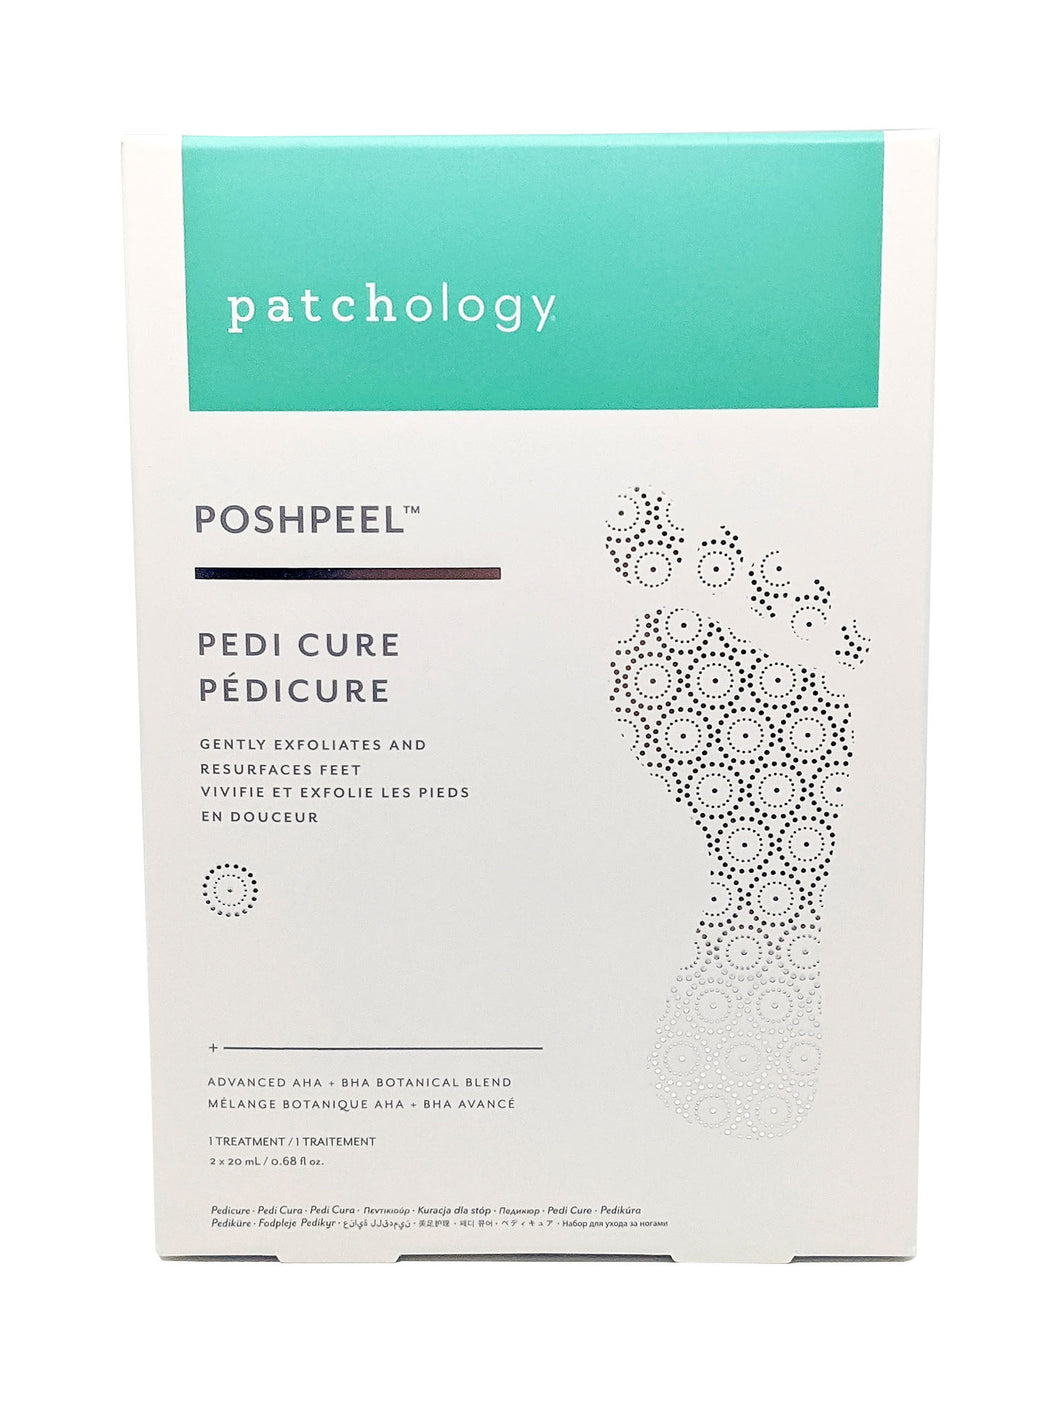 Patchology PoshPeel Pedicure Single Treatment